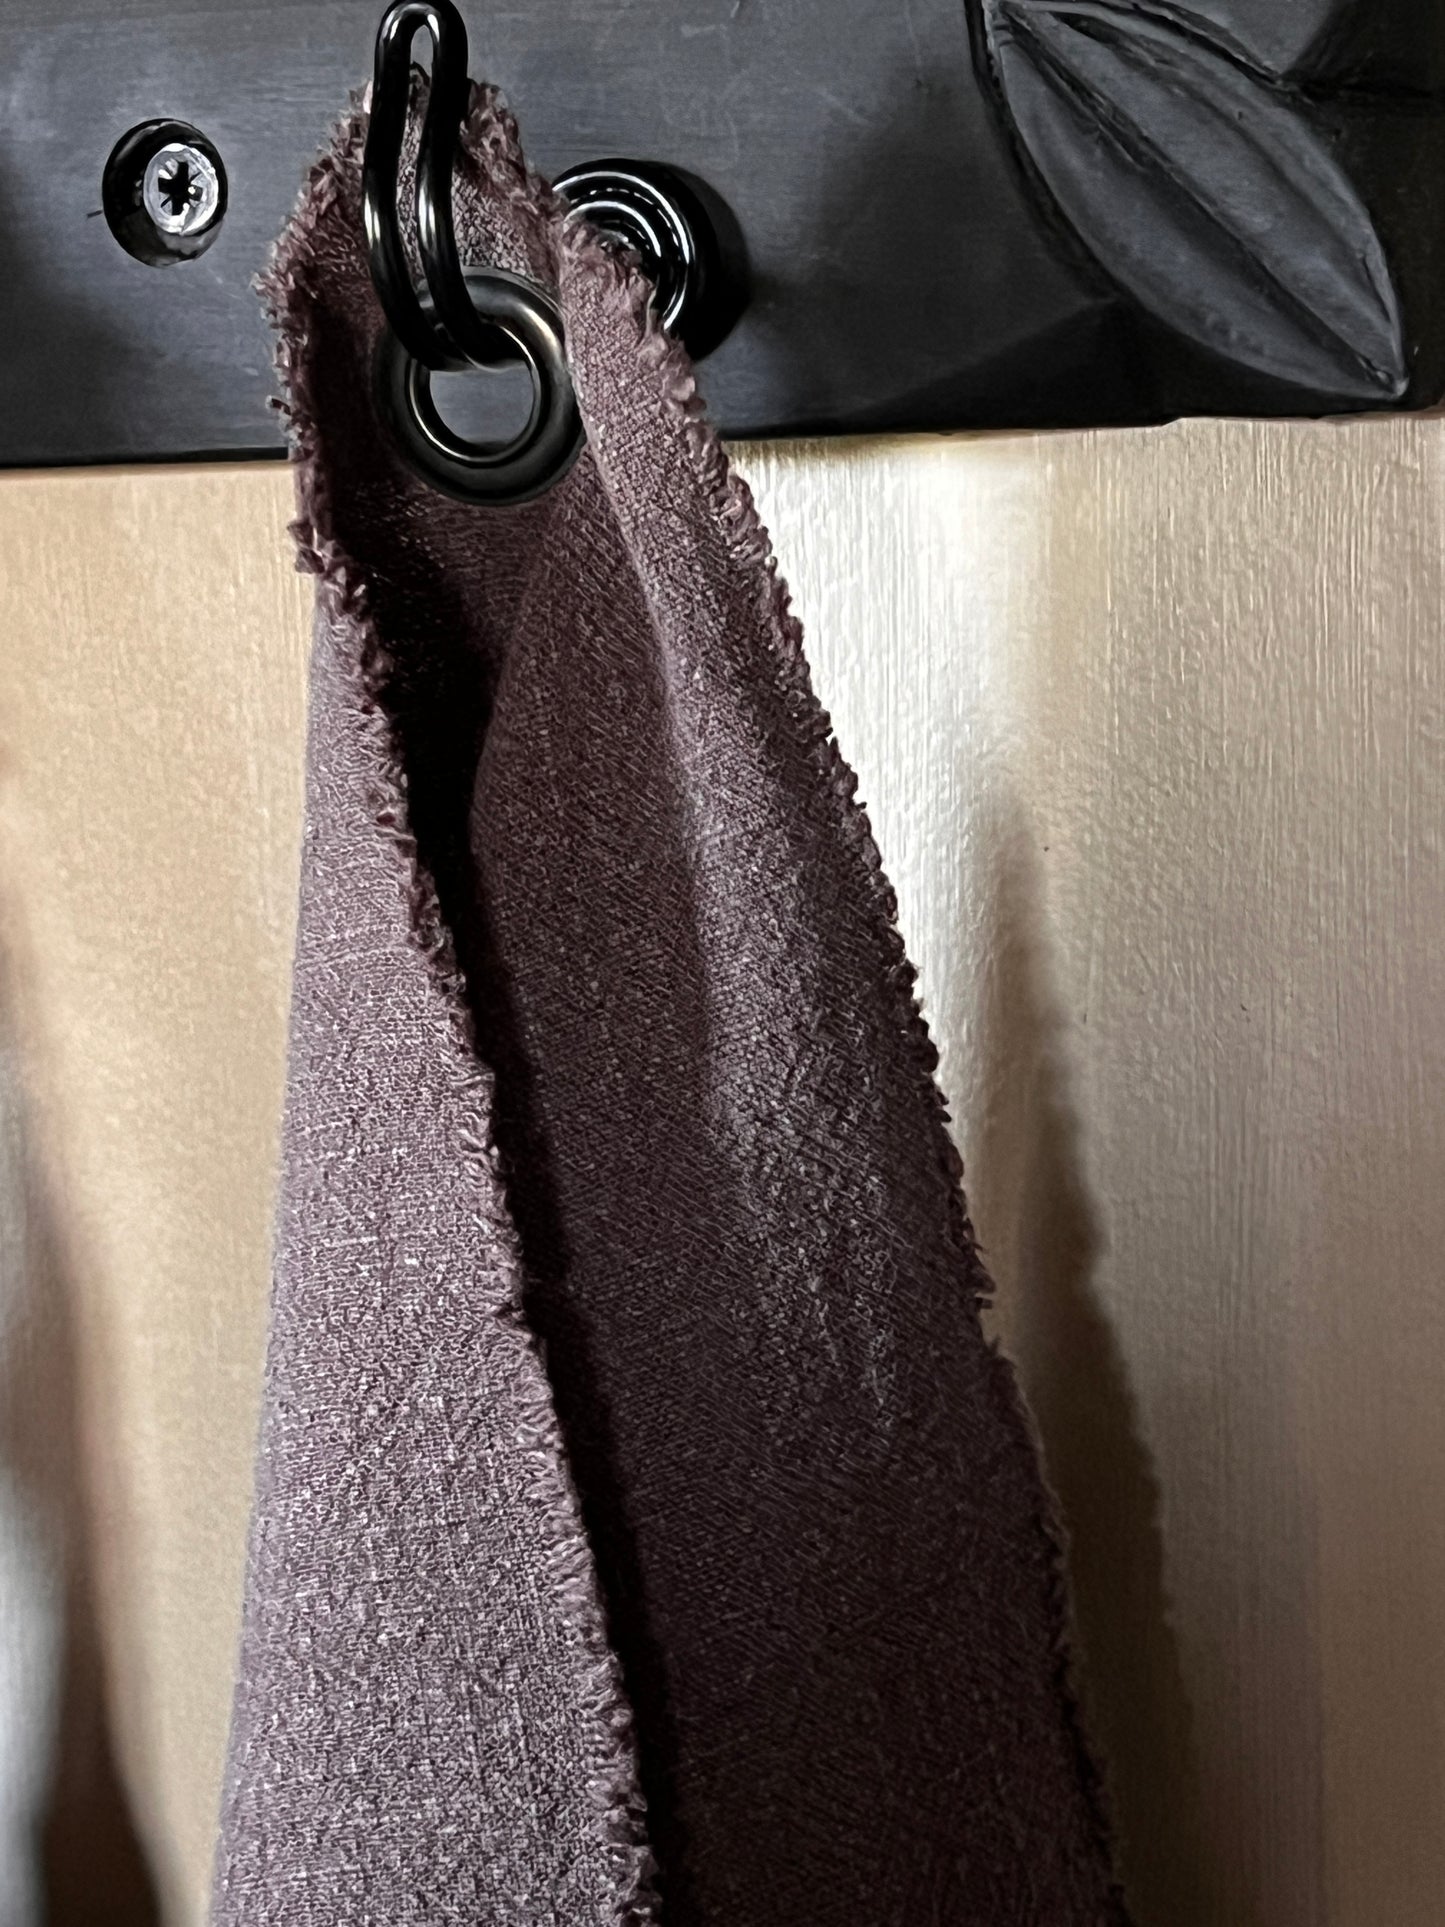 Linen kitchen towel frayed dark gray with sail eye